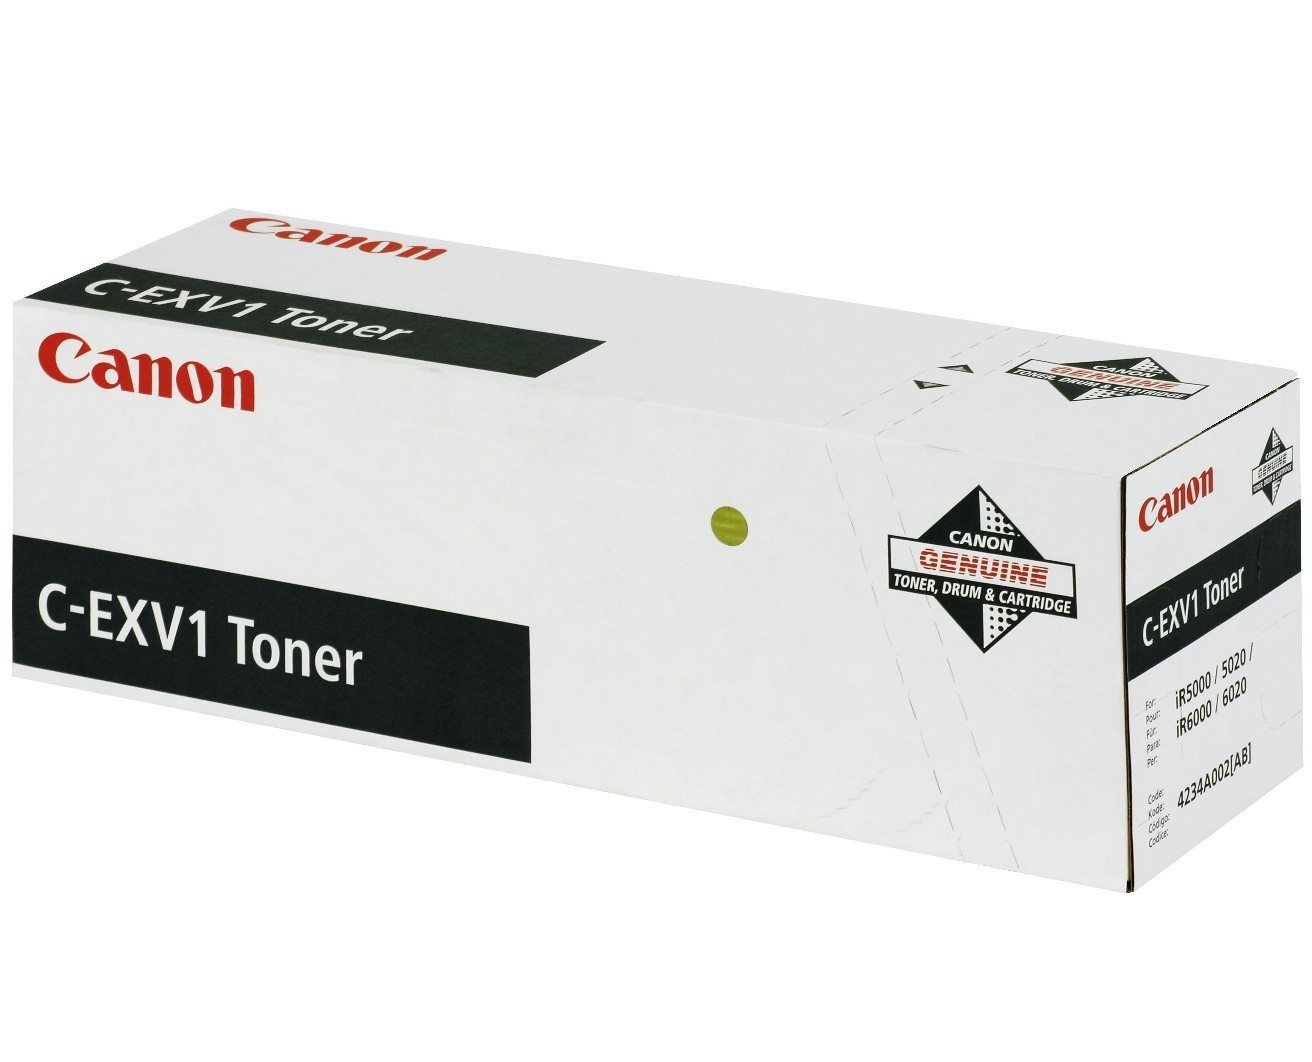 Original Toner Canon imageRUNNER 5020 i (4234A002 / C-EXV1) Schwarz